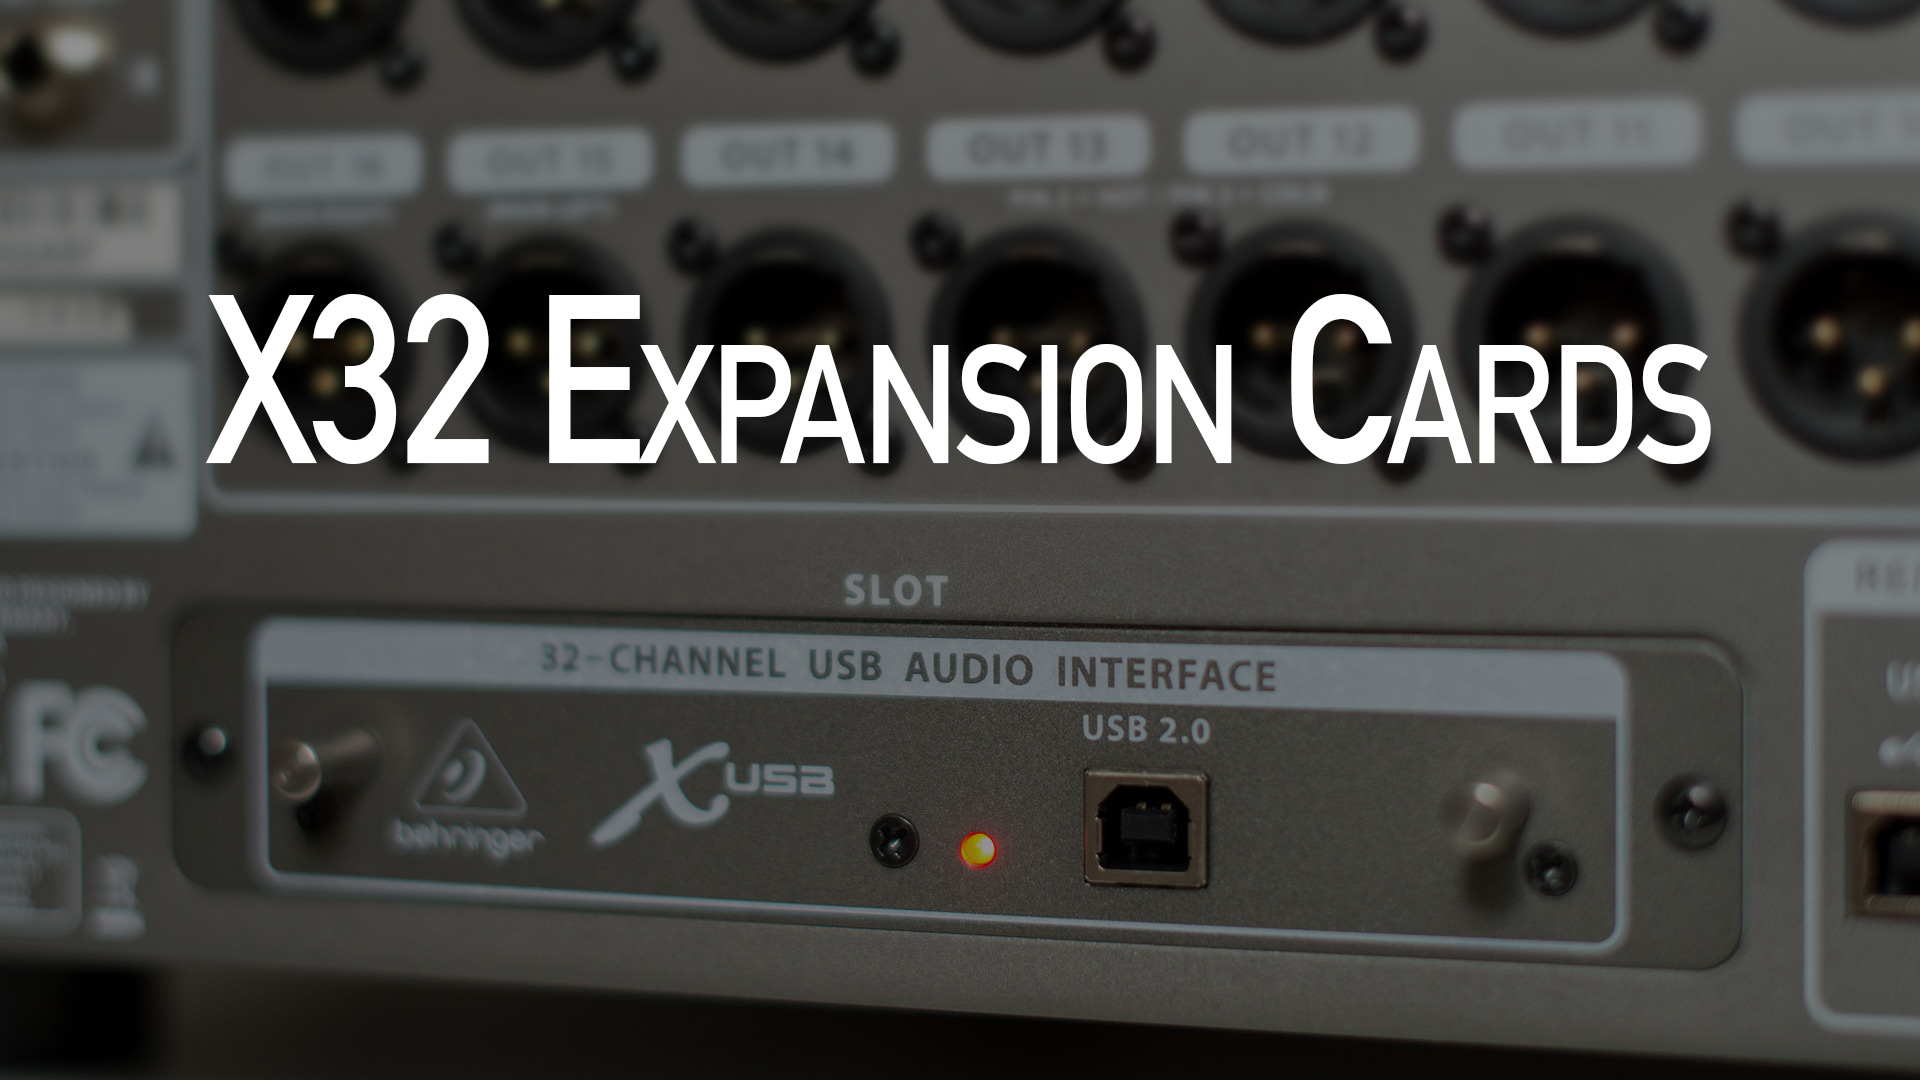 Ambassade Ideel kaptajn X32 Expansion Cards - All About Expansion Cards!